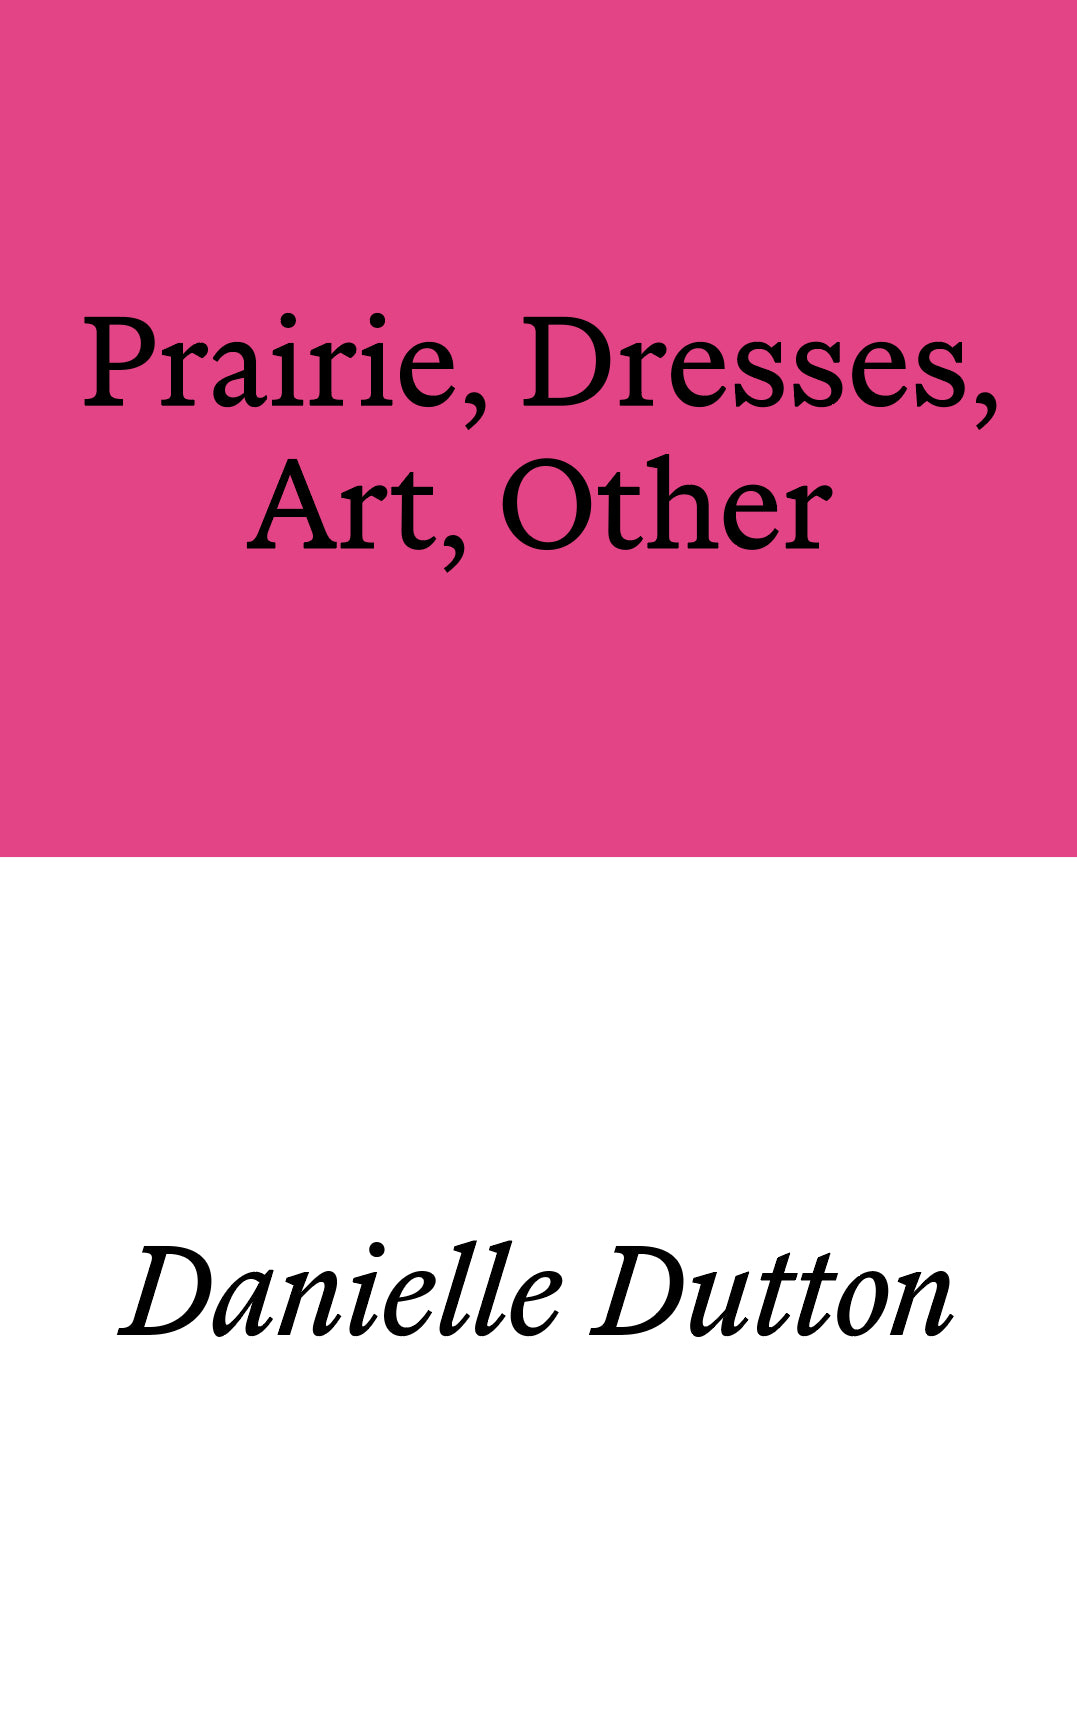 Prairie, Dresses, Art, Other cover